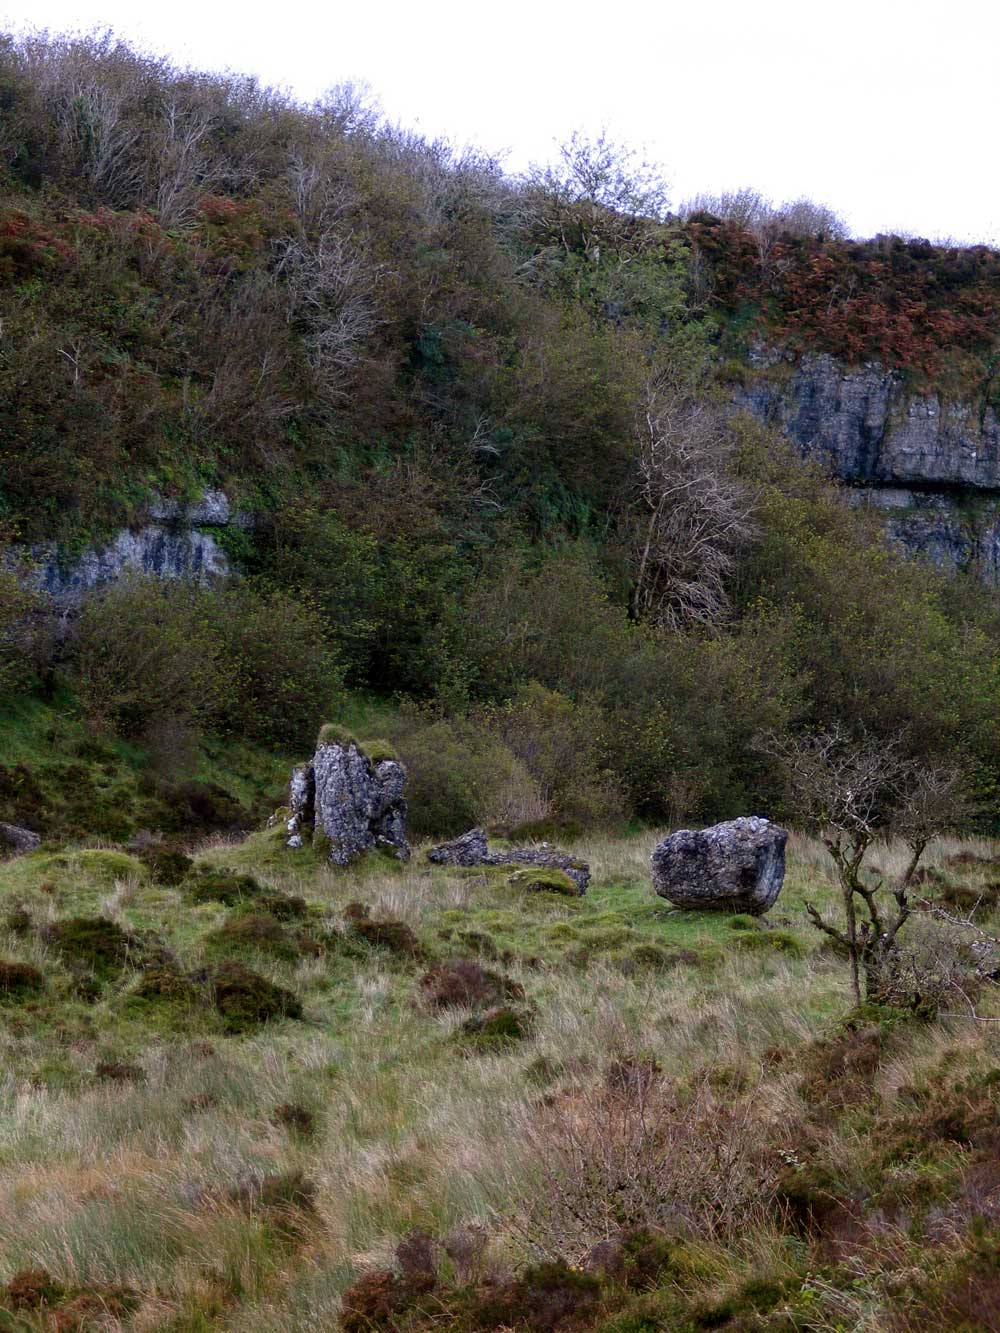 The Stirring Rock at Carrowkeel.